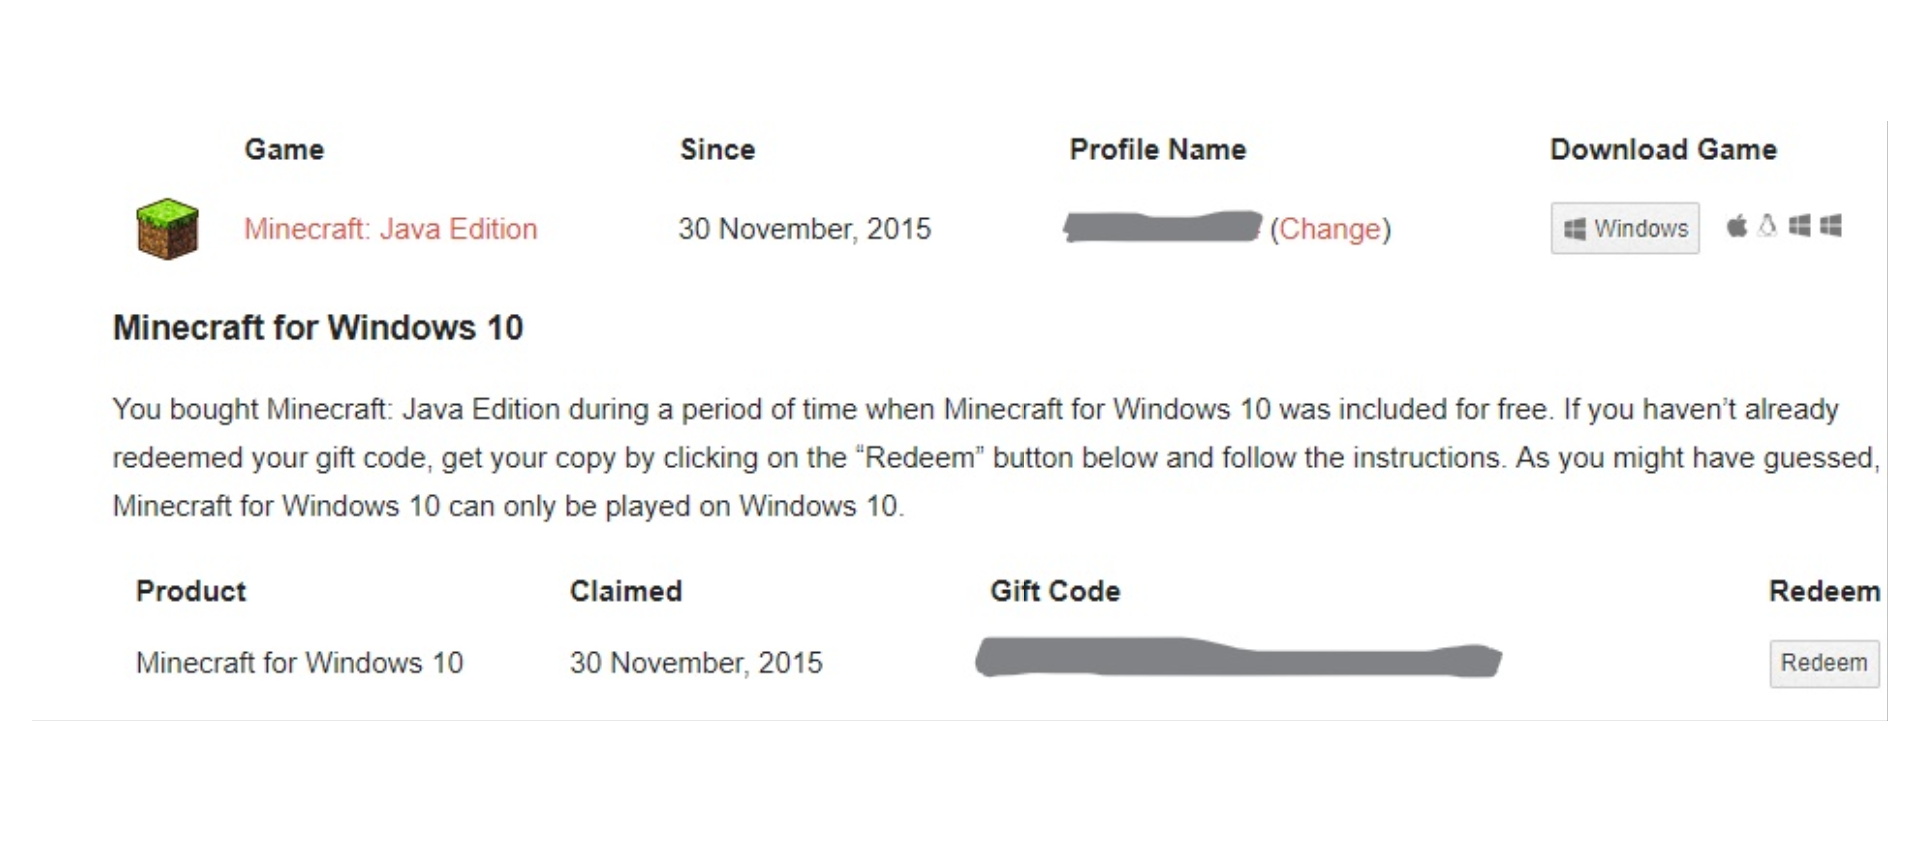 Minecraft for Windows 10 on different account. fb0c0b83-bf9b-4fd1-bd06-a858d5f1f832?upload=true.png